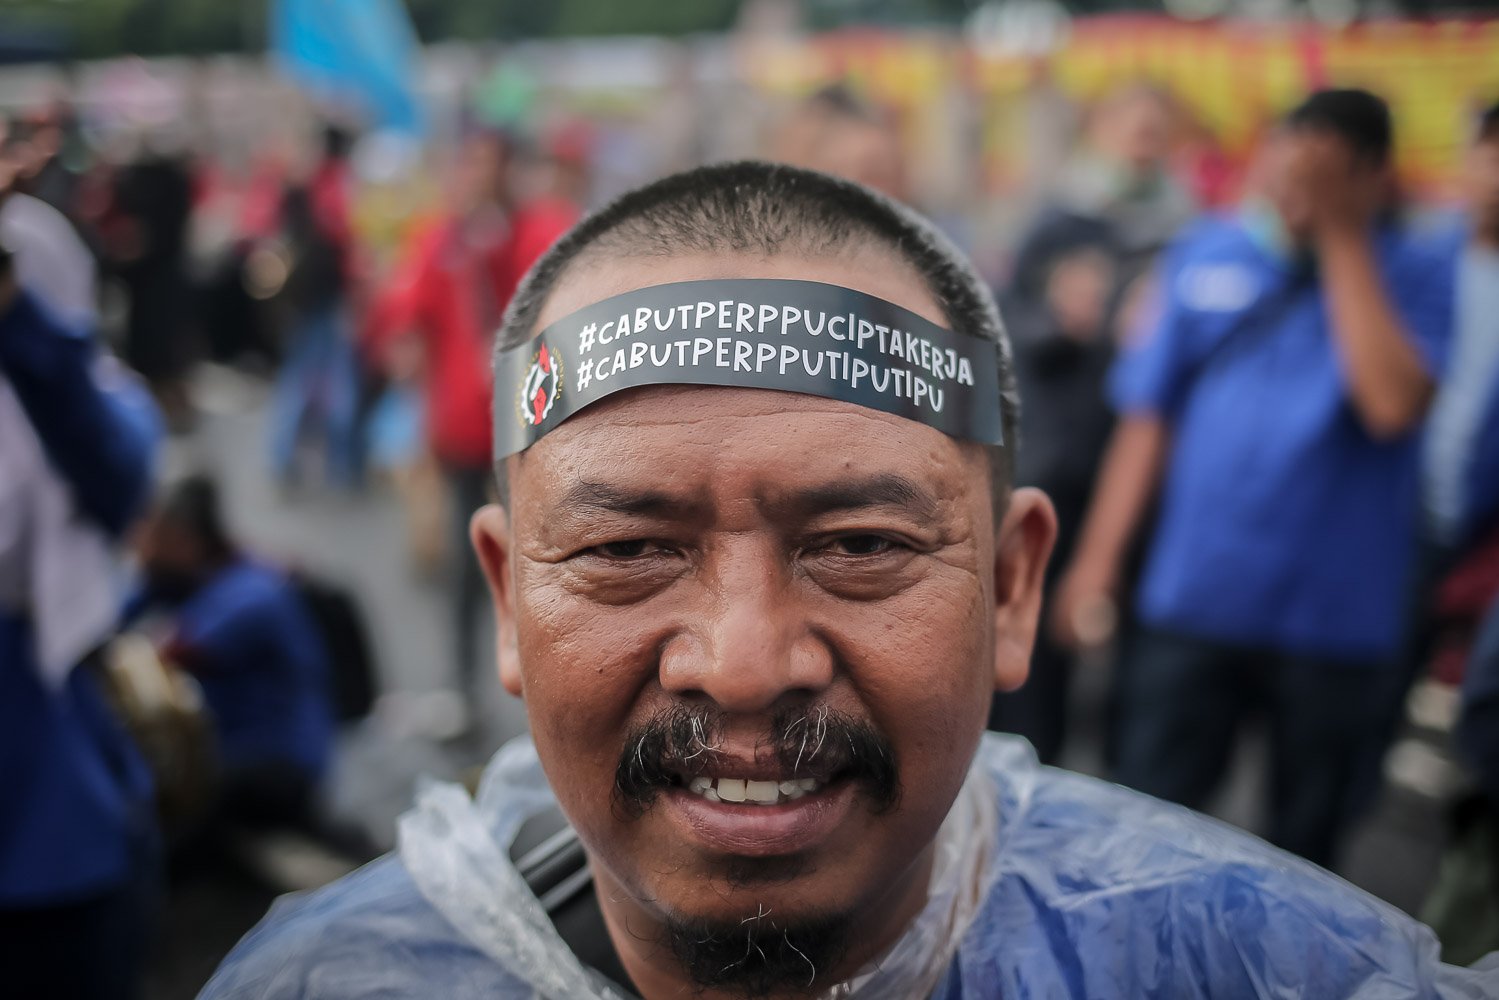 Salah seorang Massa aksi yang tergabung dari beragam elemen masyarakat memadati area depan Gedung Dewan Perwakilan Rakyat, Senayan, Jakarta, Selasa (28/2). Mereka menggelar aksi unjuk rasa menolak Peraturan Pemerintah Pengganti Undang-Undang Cipta Kerja atau Perppu Ciptaker.